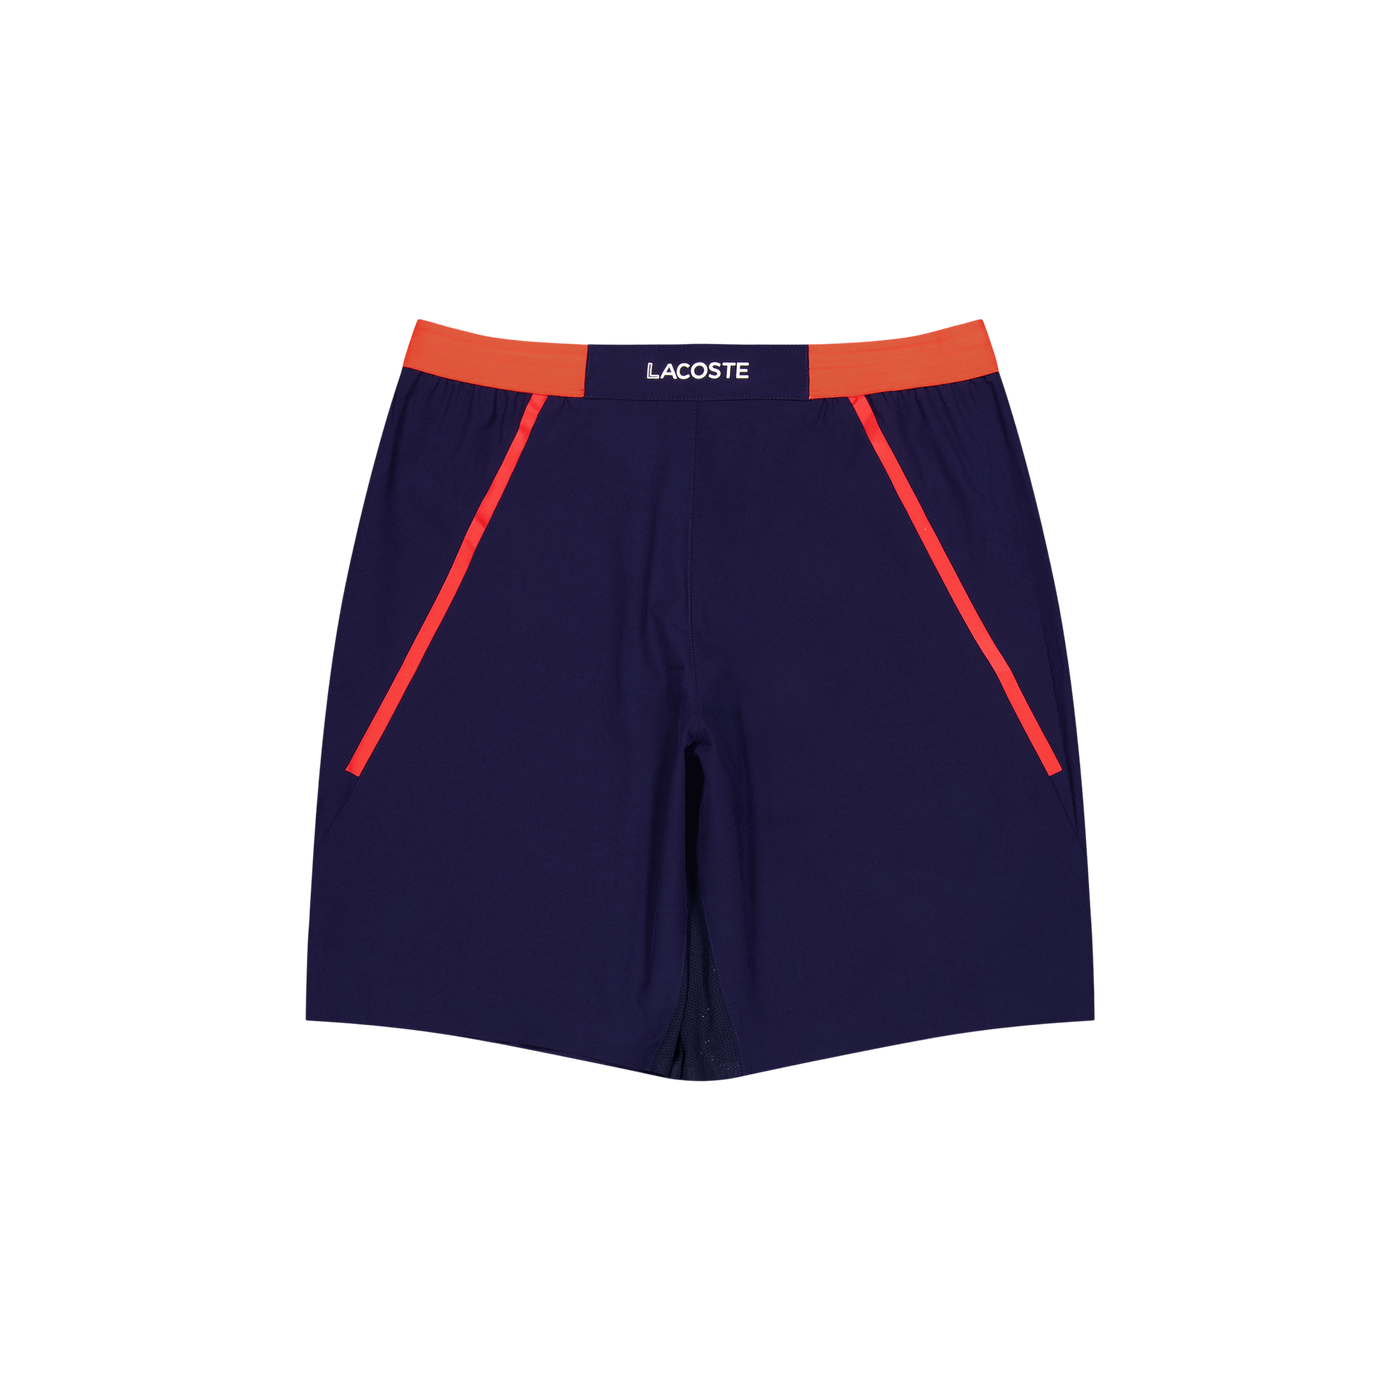 Lacoste Shorts Navy/blue